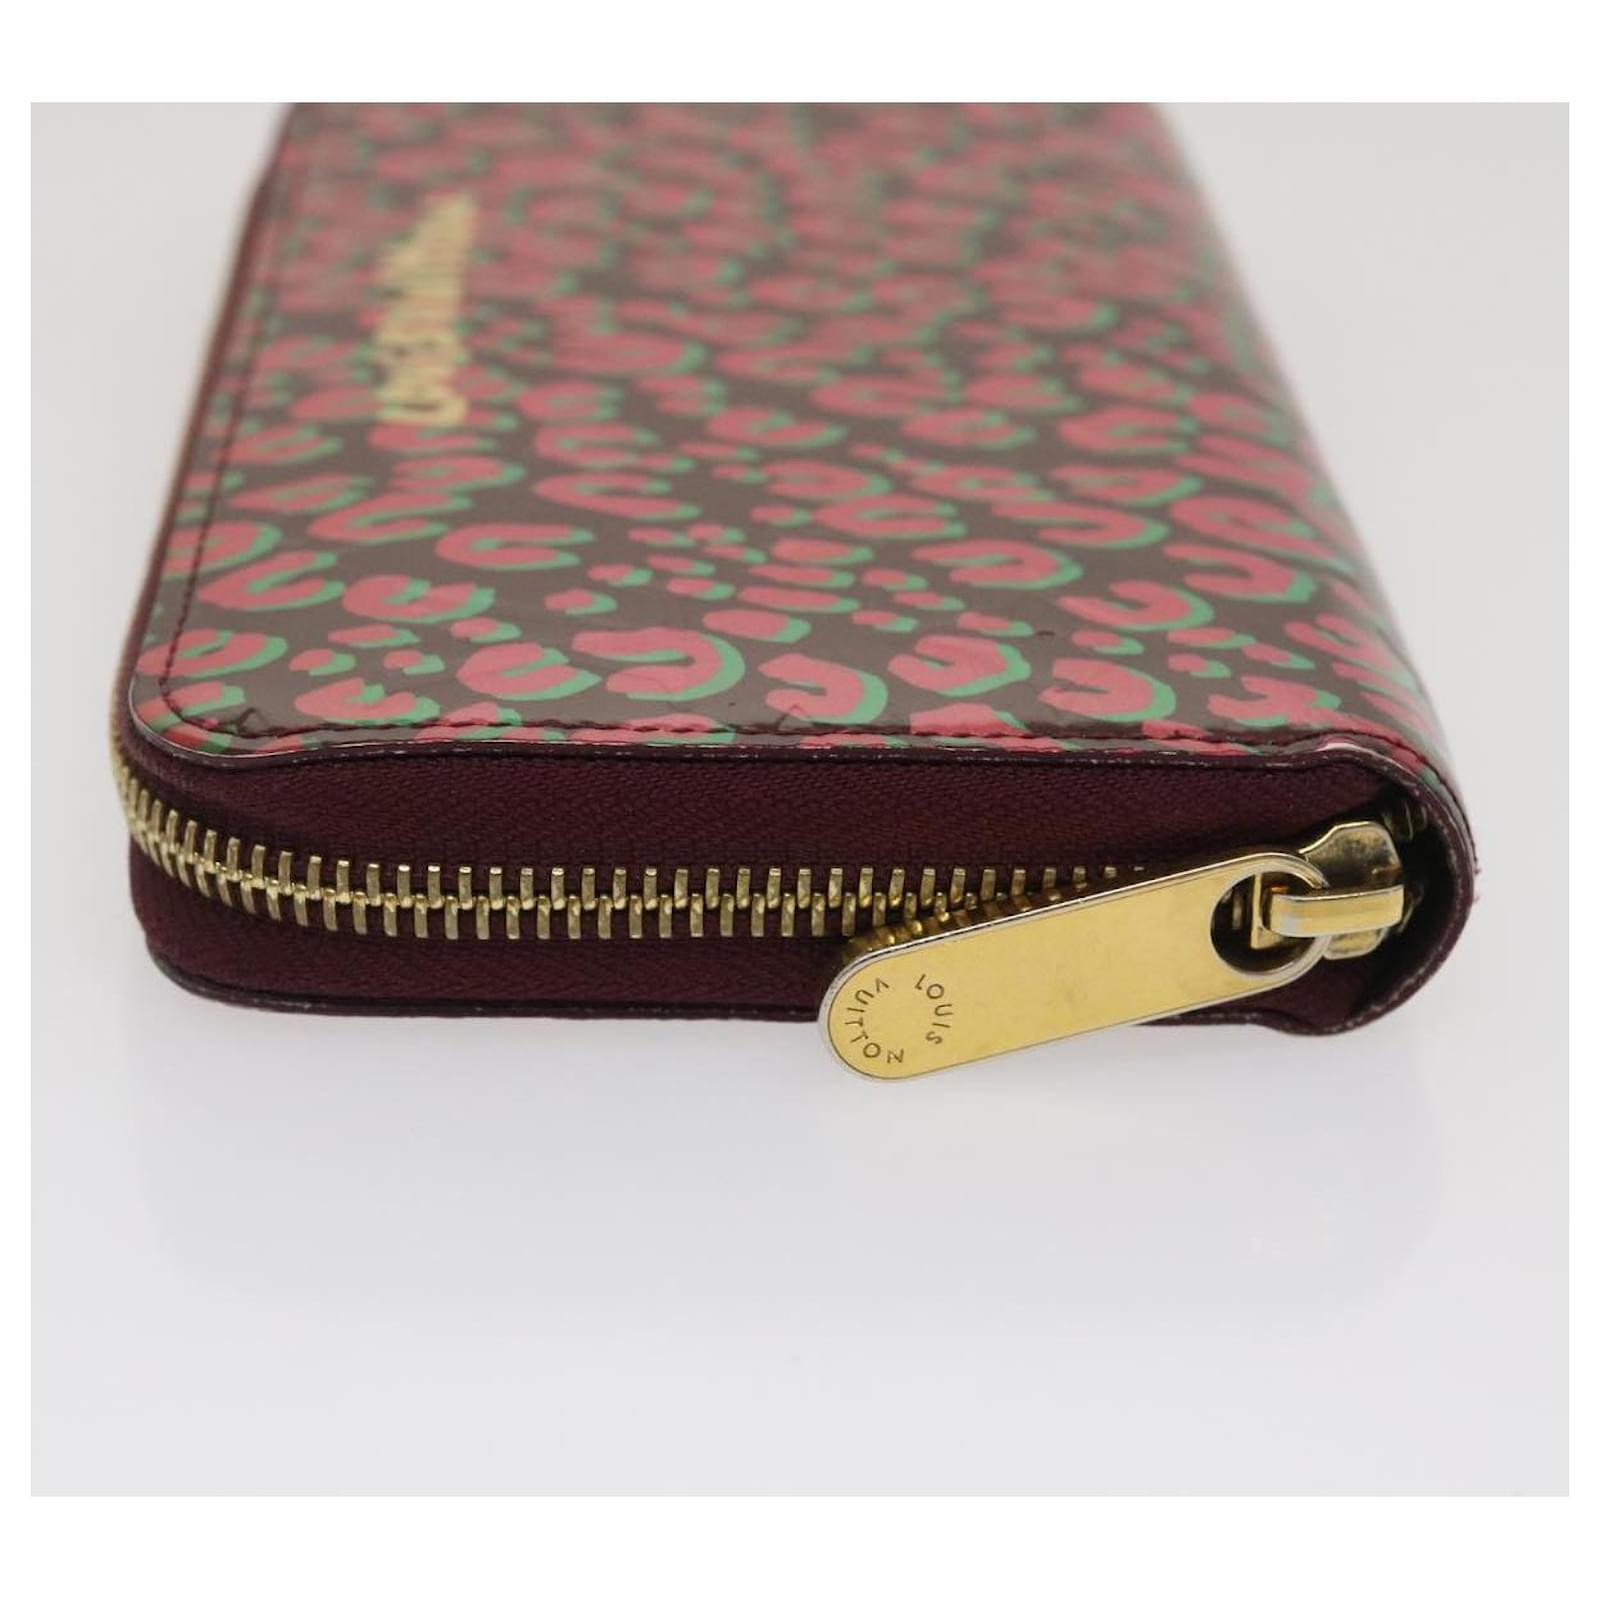 LOUIS VUITTON Vernis Leopard Zippy Wallet Long Wallet Pink M91477